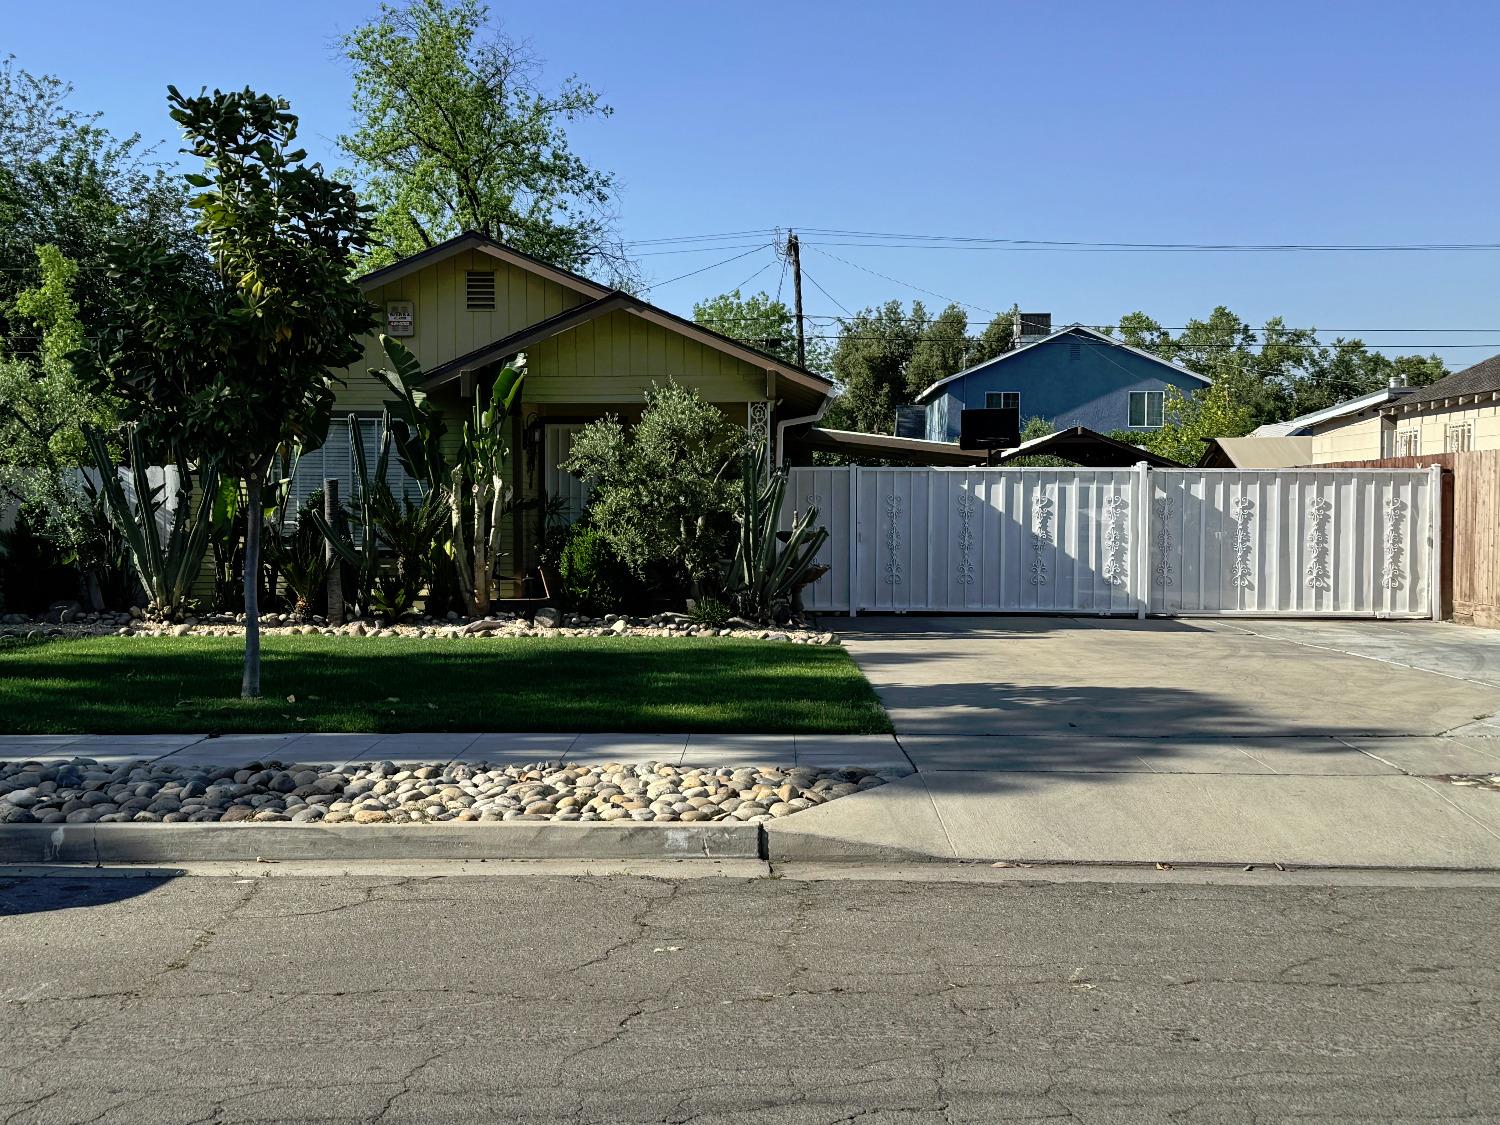 Photo of 4581 E Washington Ave in Fresno, CA